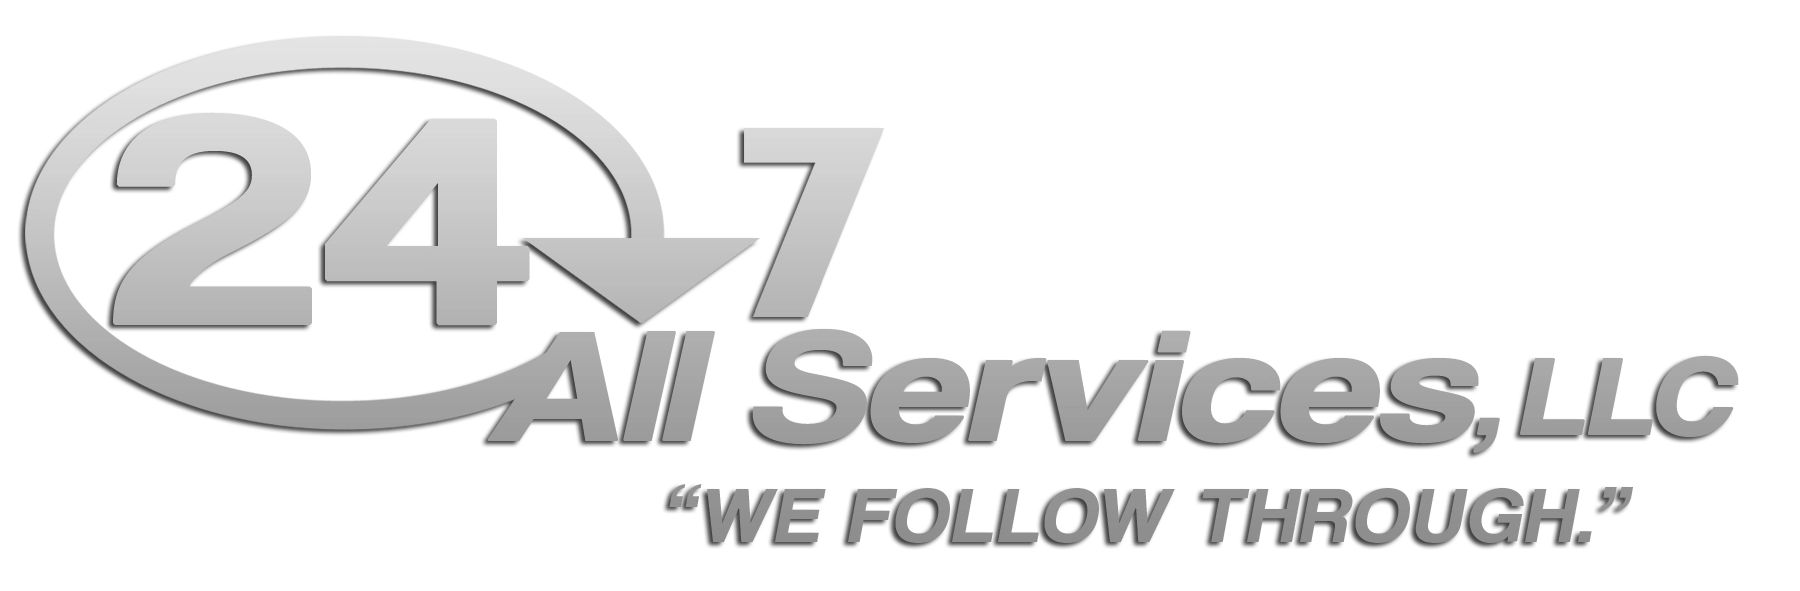 24-7 All Services Llc Logo